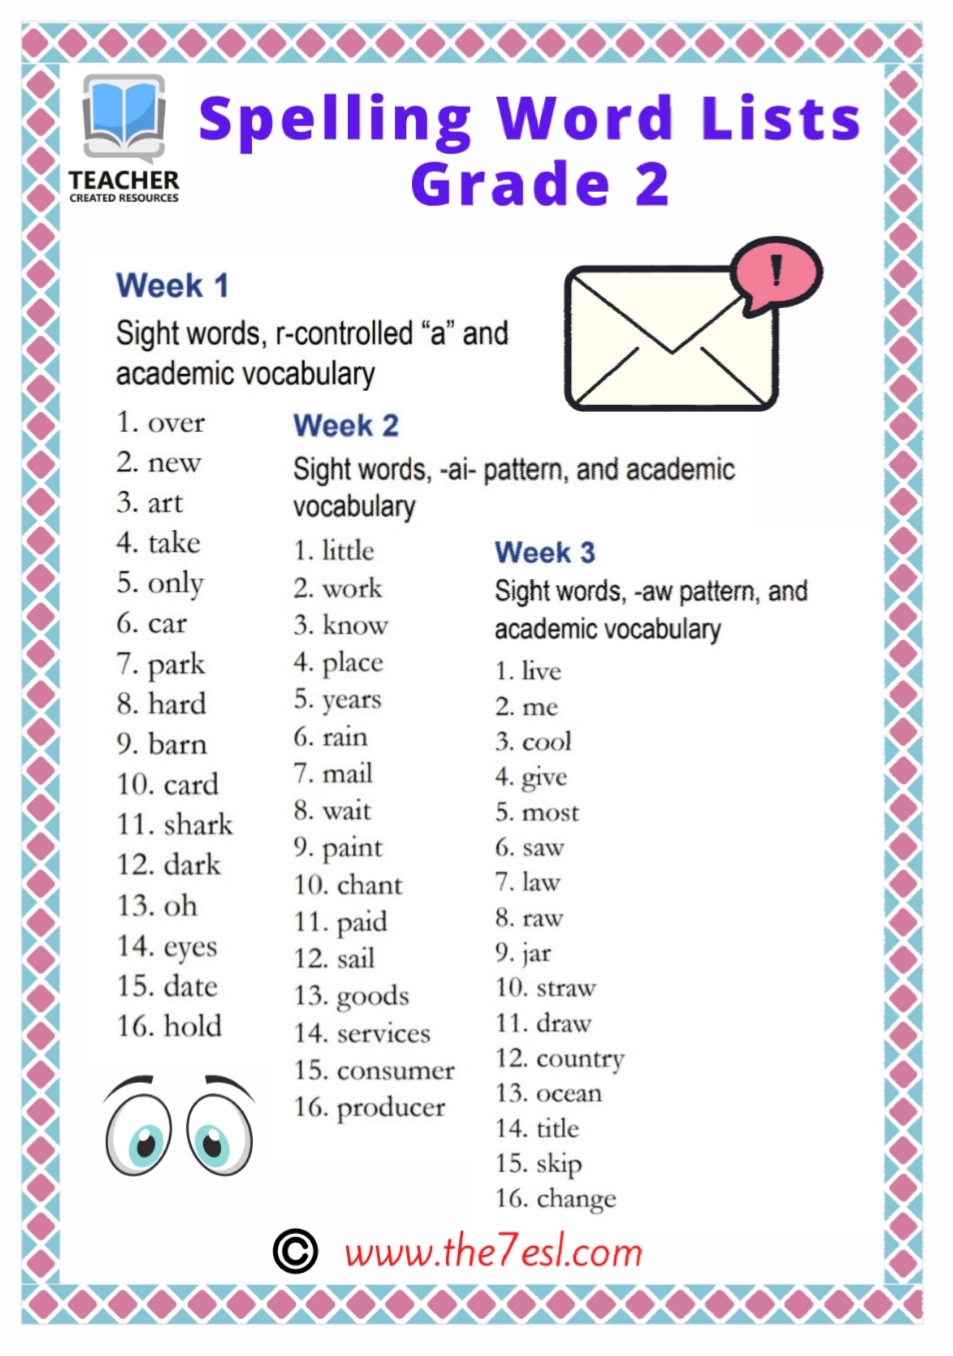 English Worksheets Make A Spelling Word Search - Gambaran